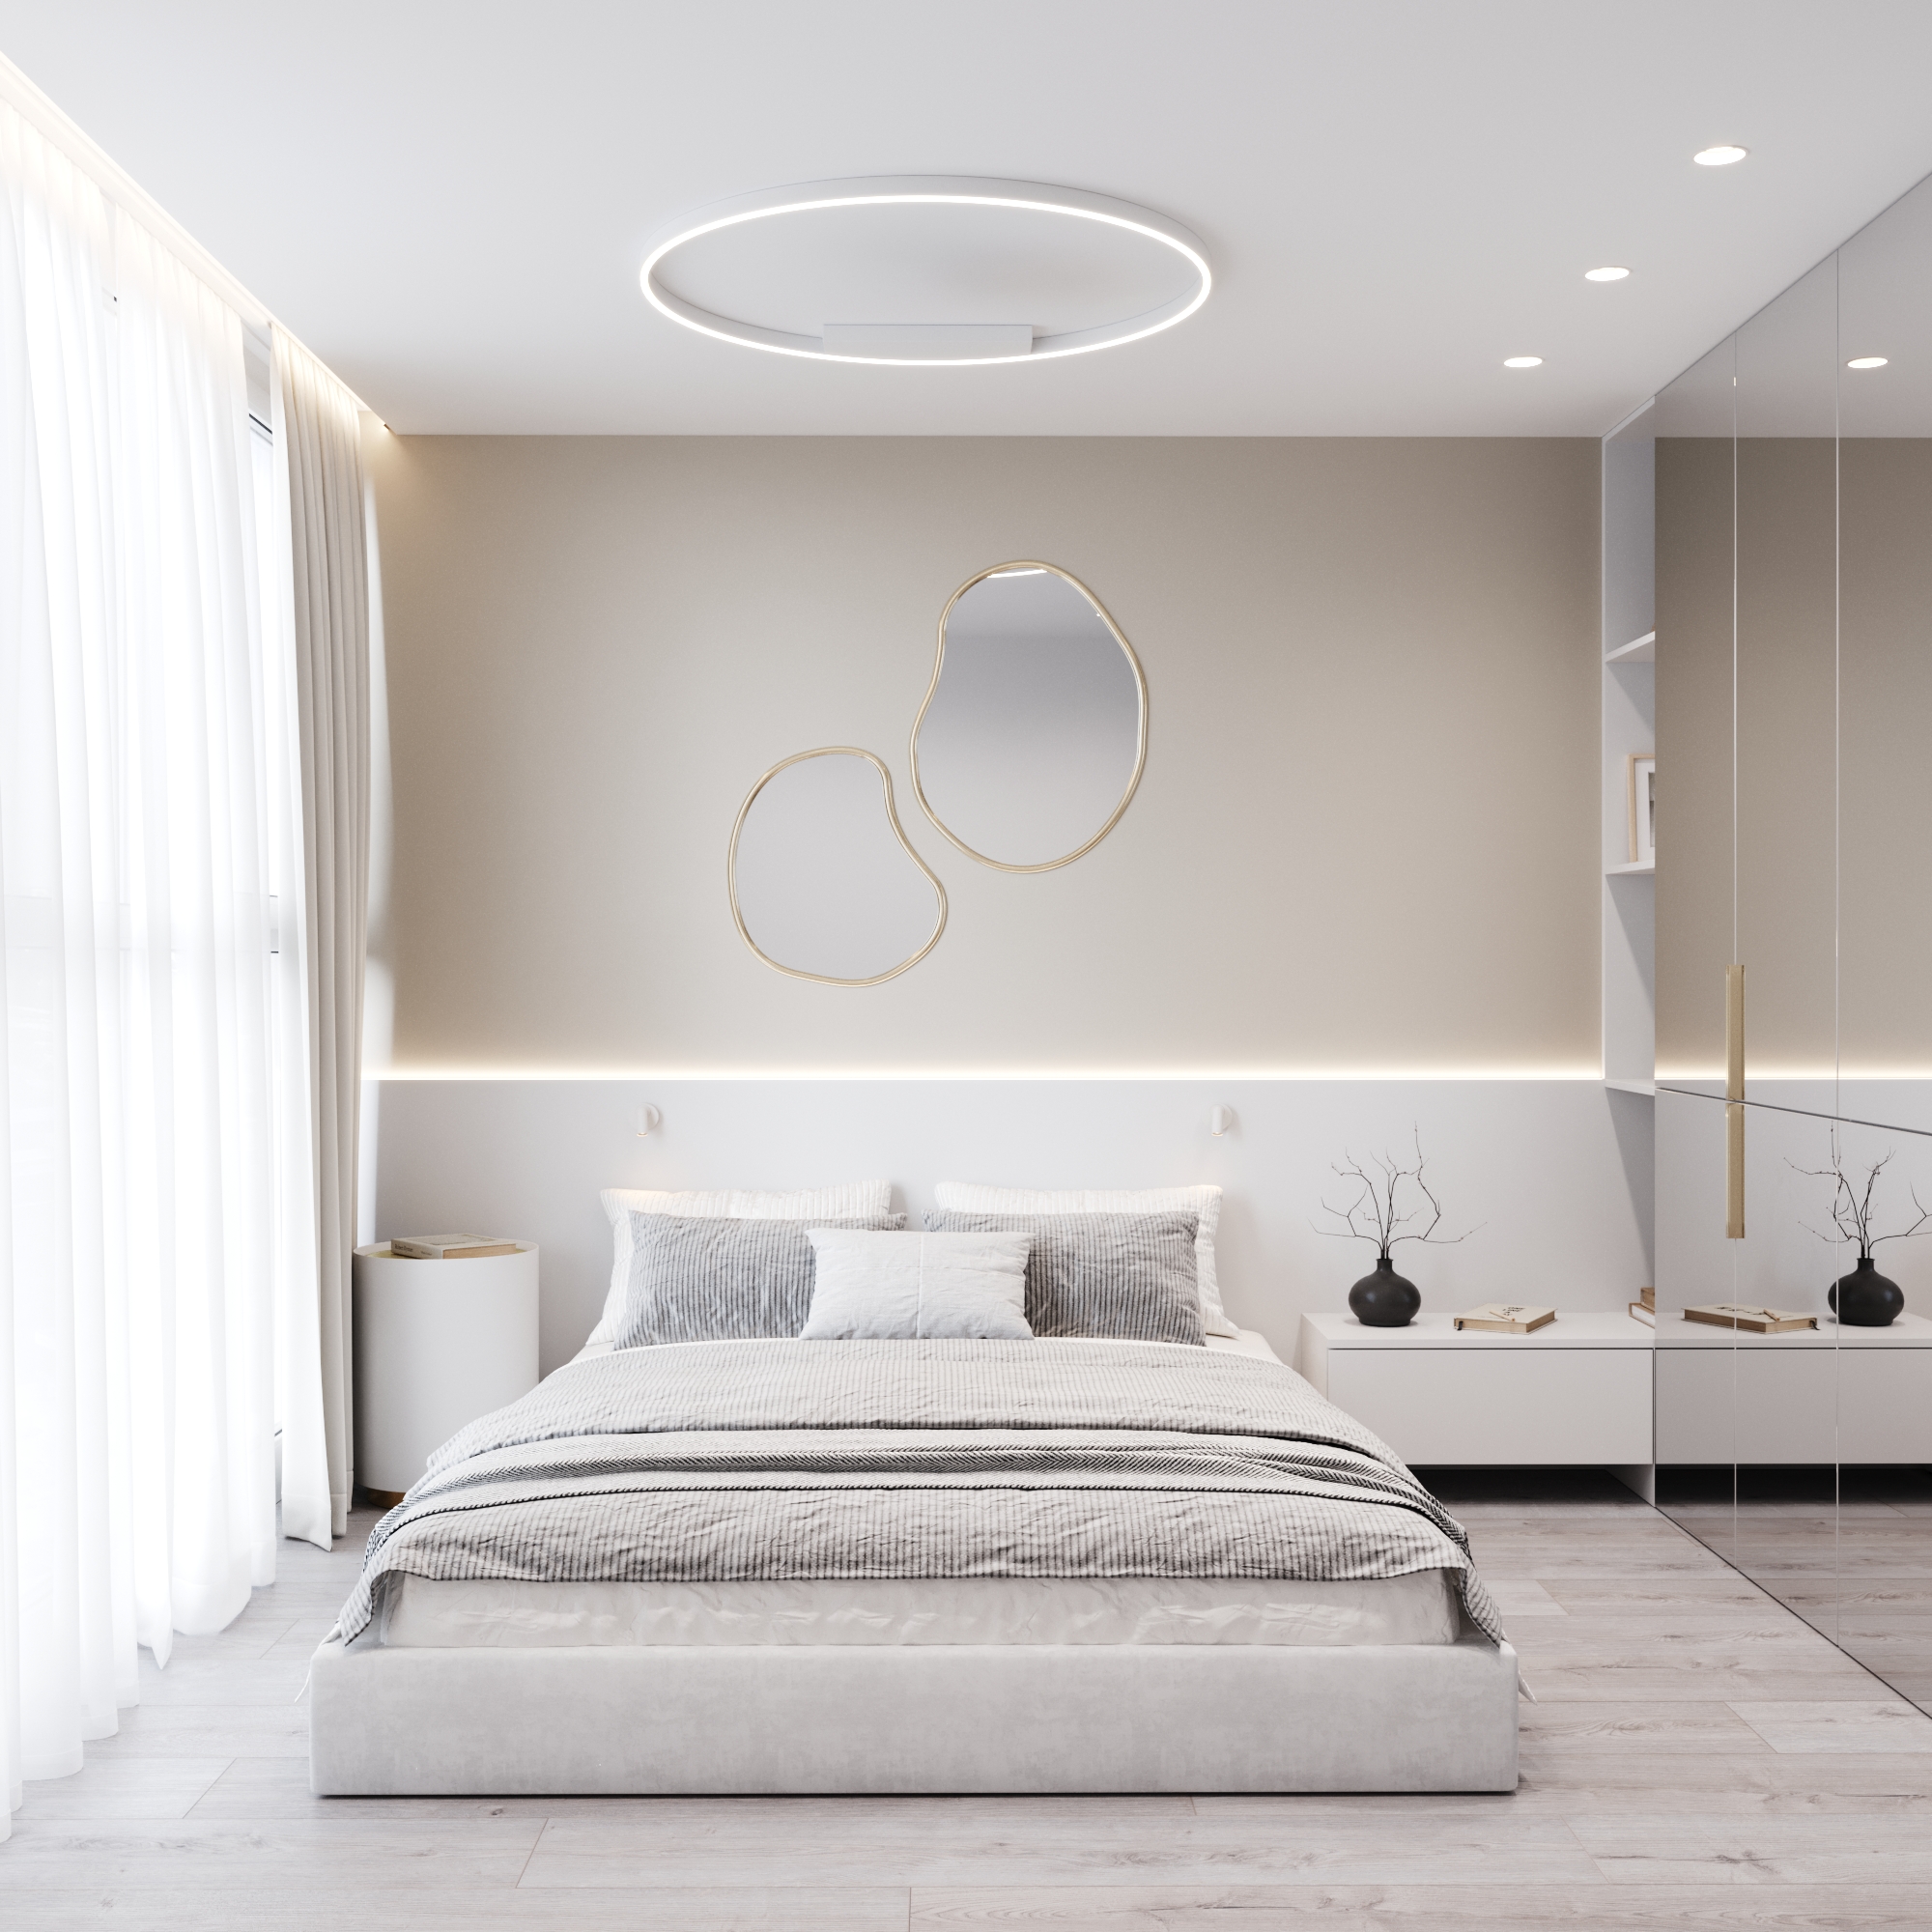 WHITE LIST дизайн квартиры в минимализм | Проекты Prana - Фото 21